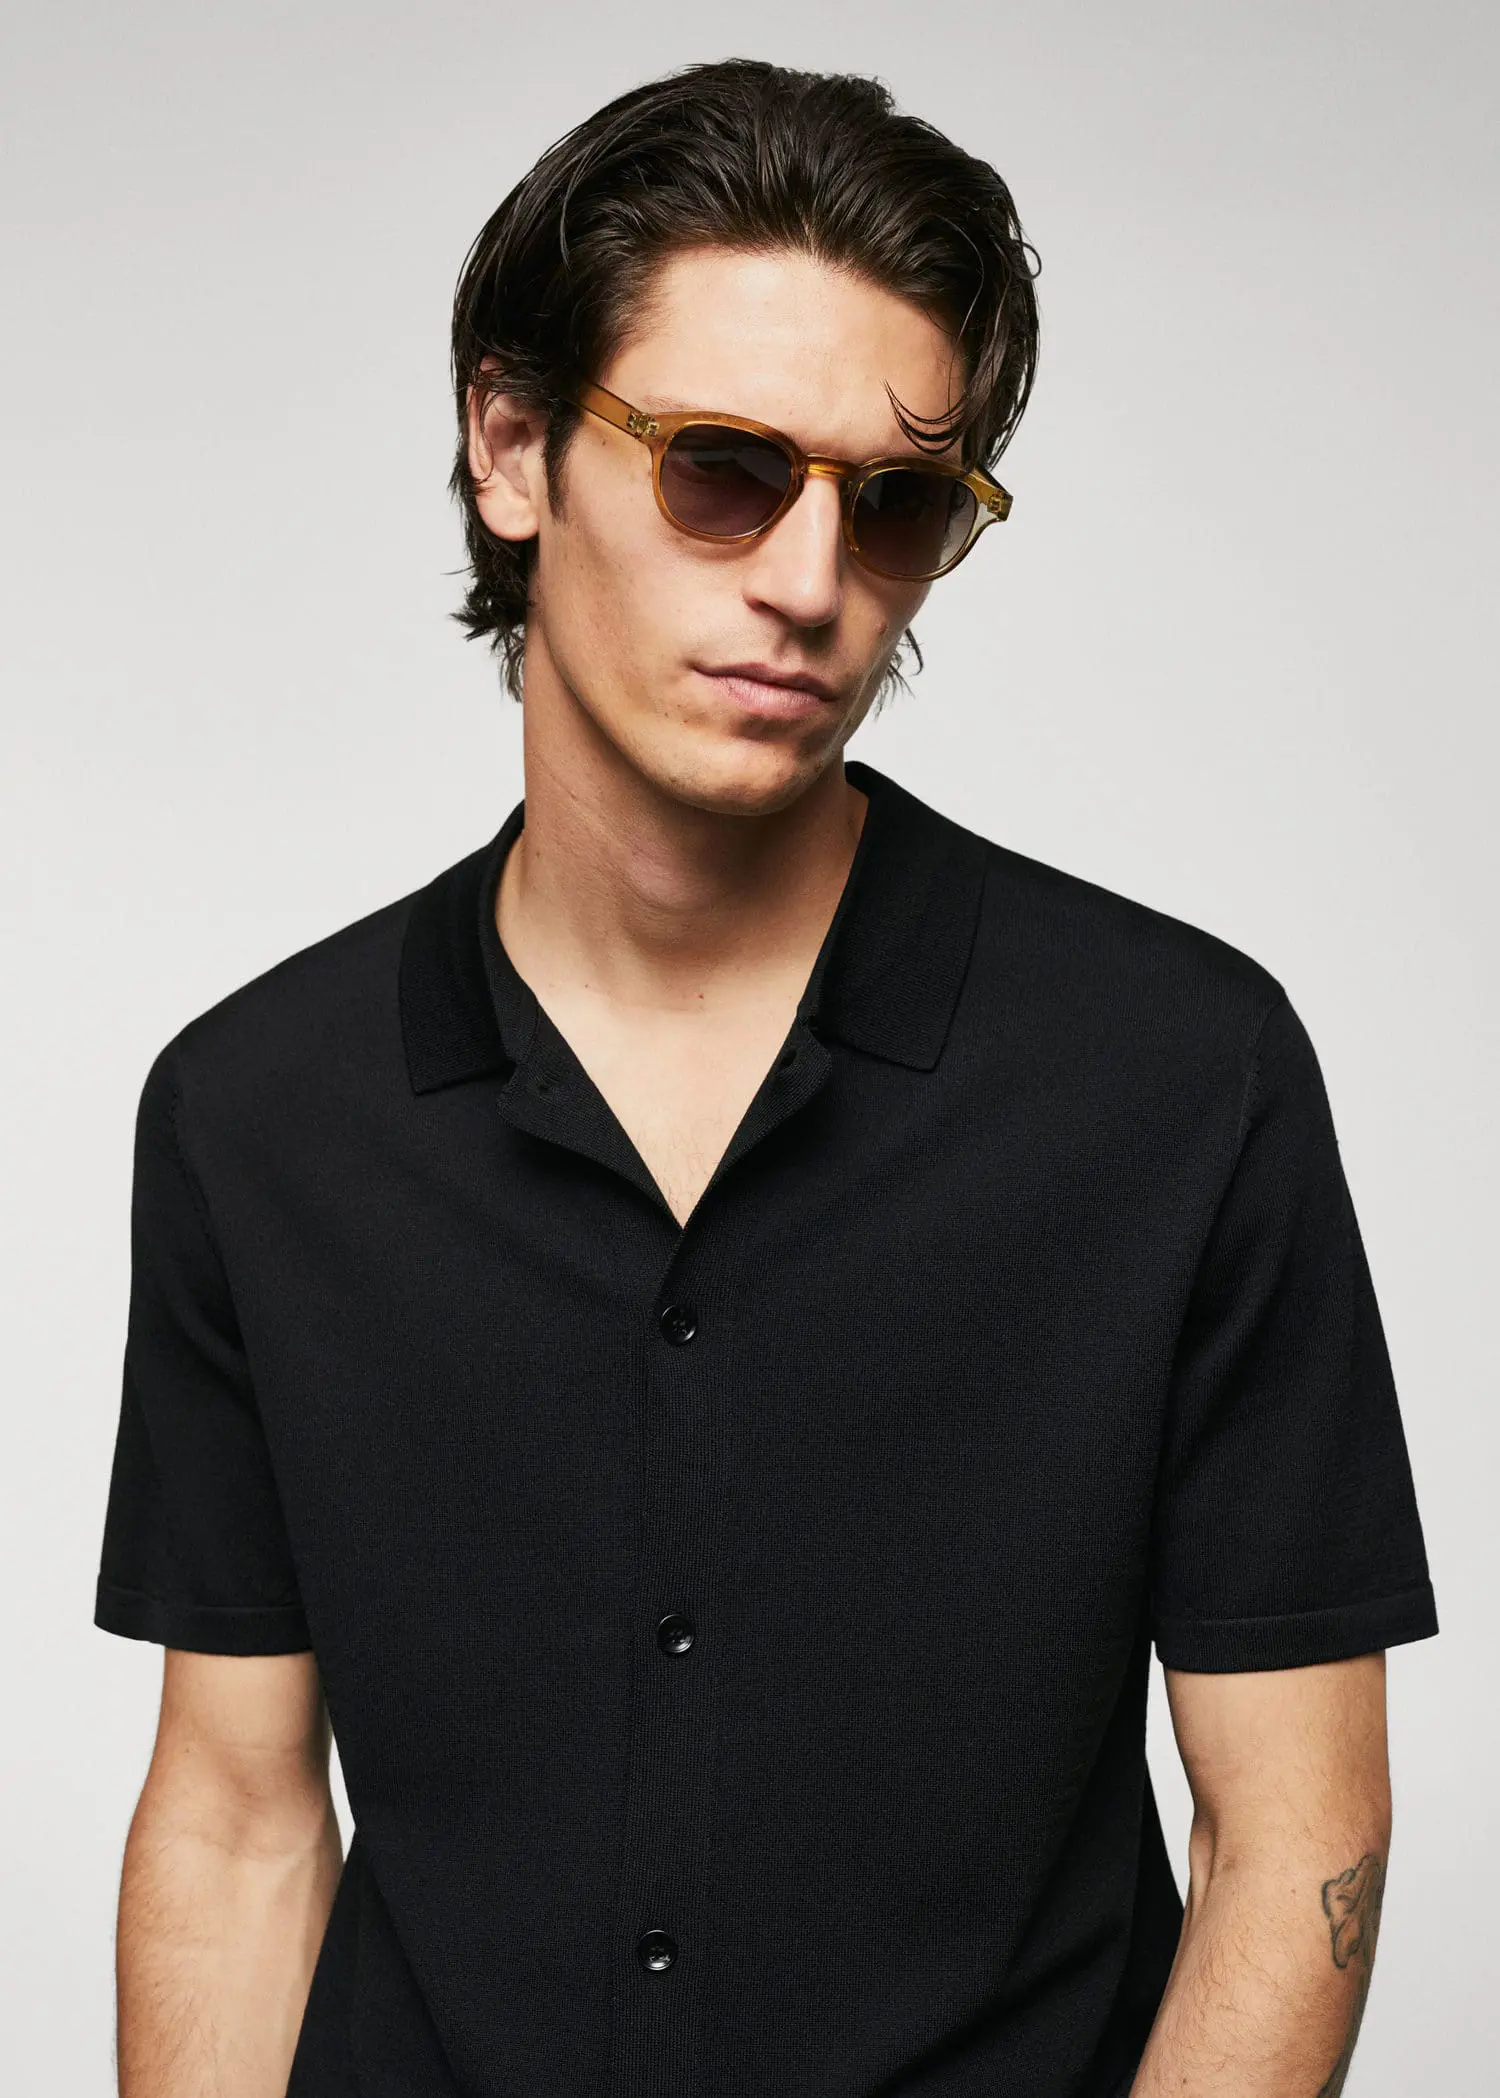 Mango Fine-knit buttoned polo shirt. a young man wearing sunglasses and a black shirt. 